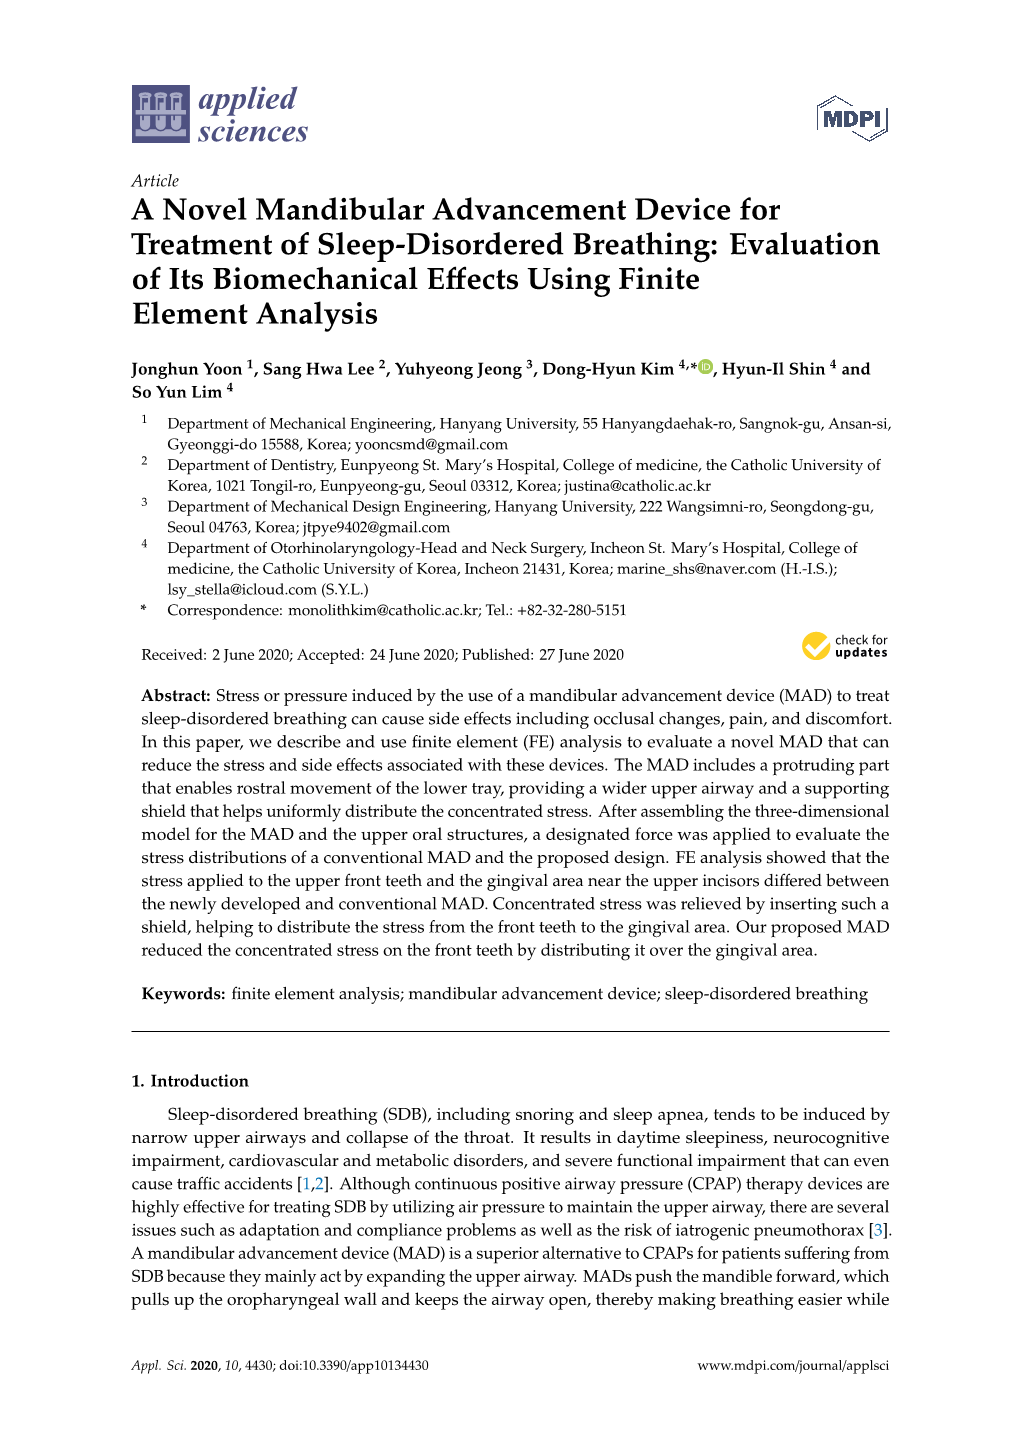 A Novel Mandibular Advancement Device for Treatment of Sleep-Disordered Breathing: Evaluation of Its Biomechanical Eﬀects Using Finite Element Analysis